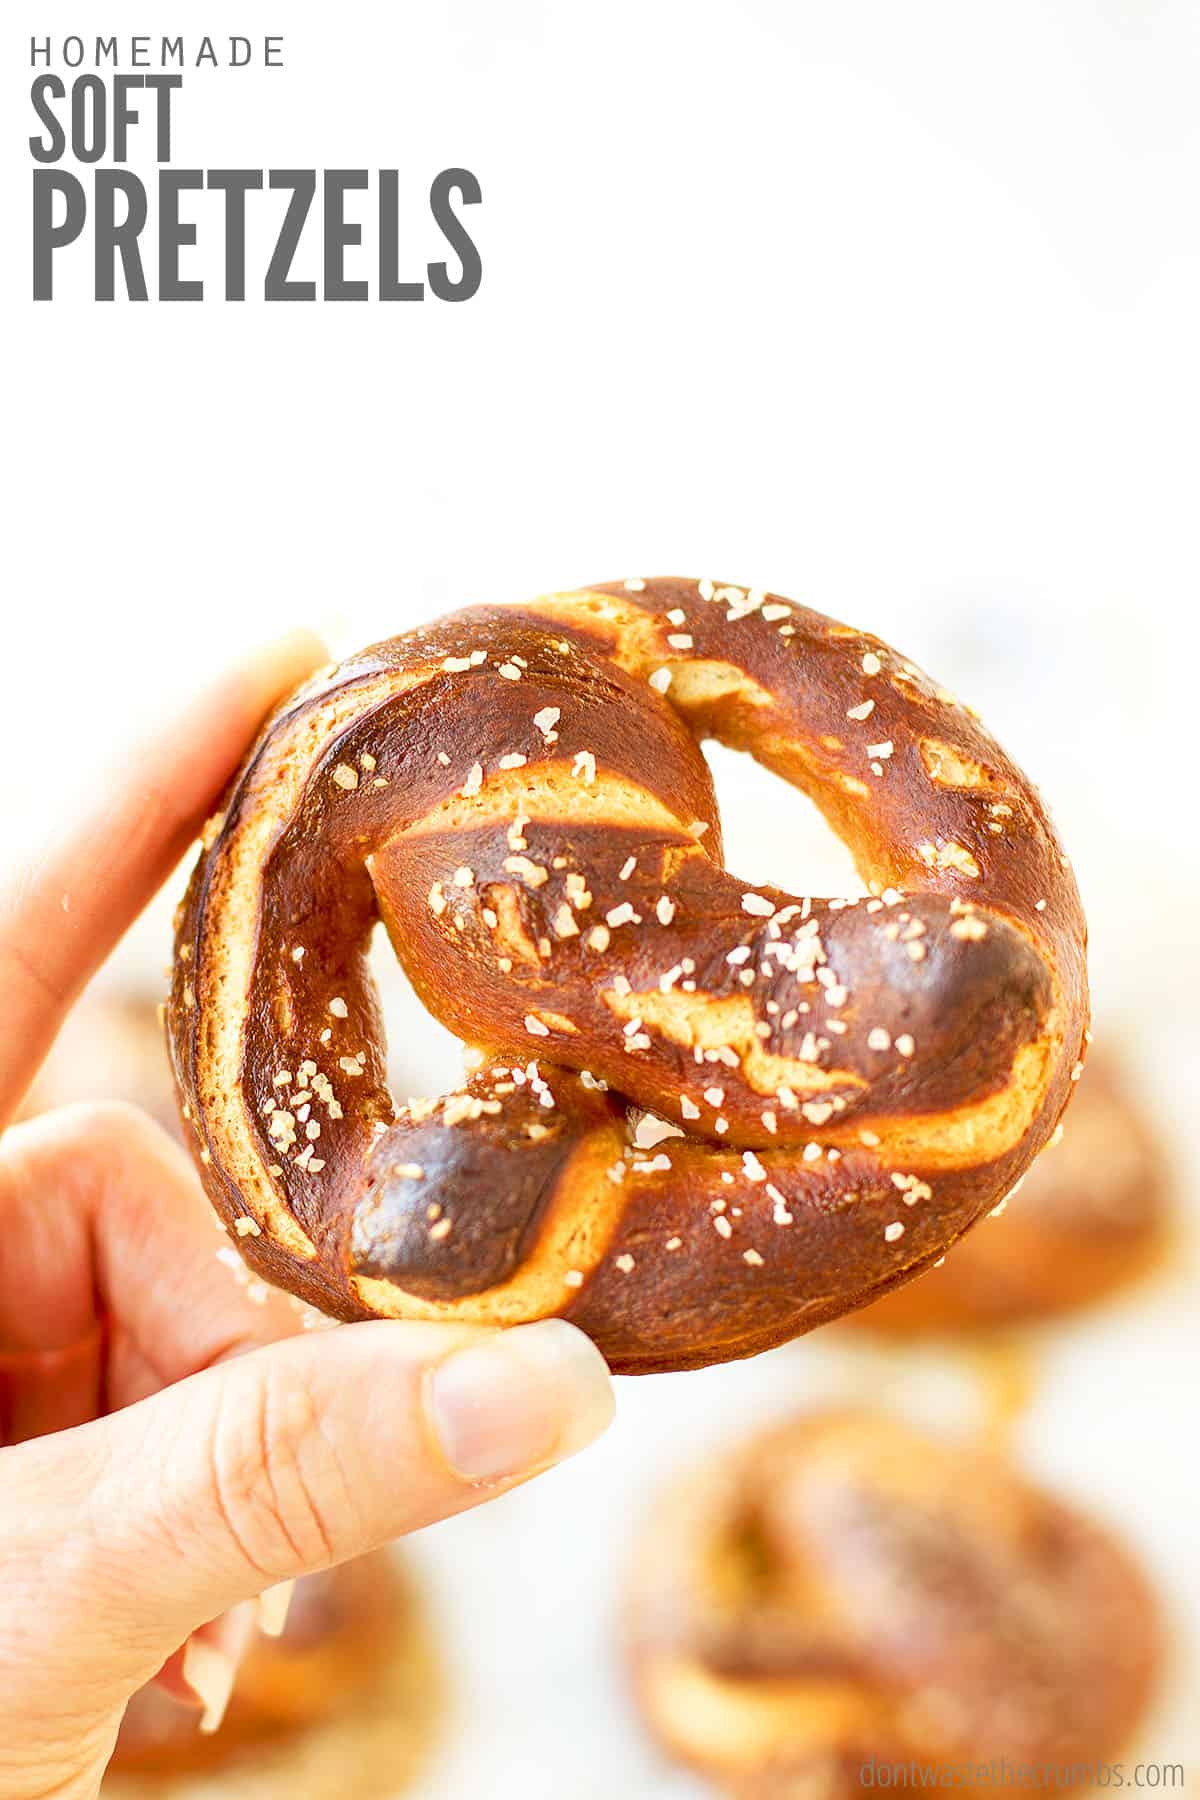 Homemade soft pretzel with salt sprinkled on top. Text overlay reads, "Homemade Soft Pretzels."